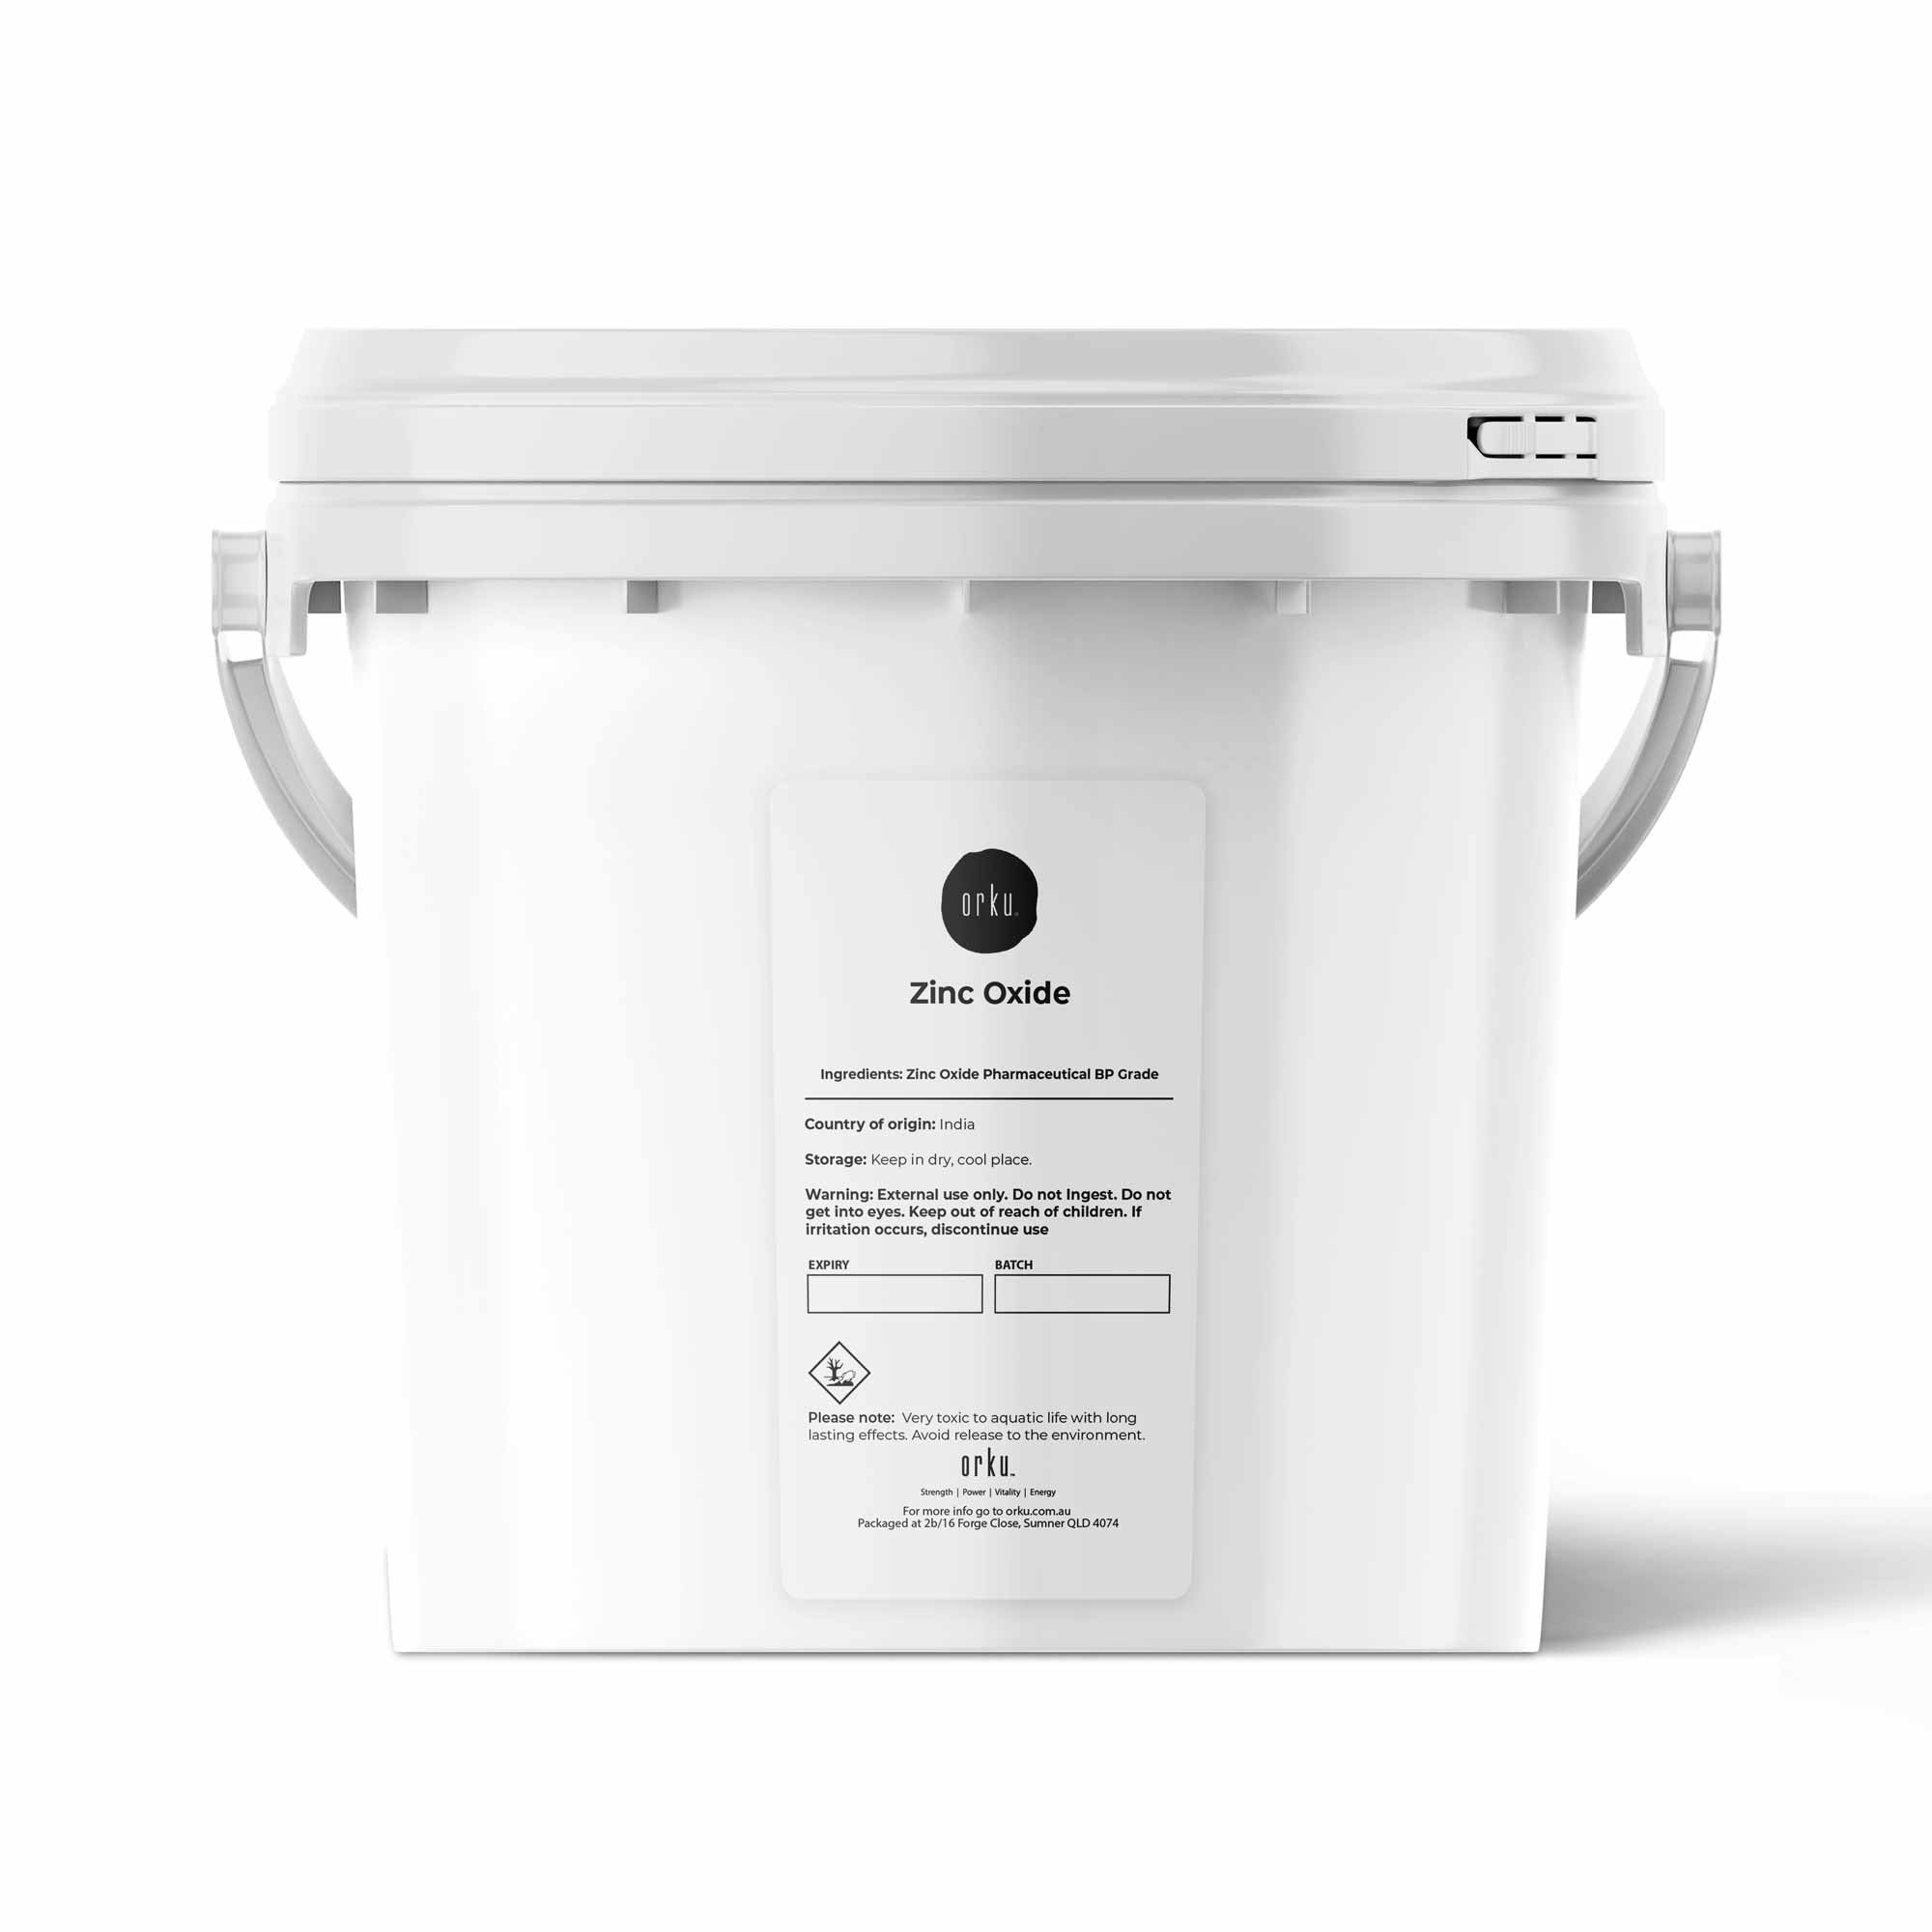 1.6Kg Zinc Oxide Powder BP Pharmaceutical Grade 99.9% Purity Resealable Bucket